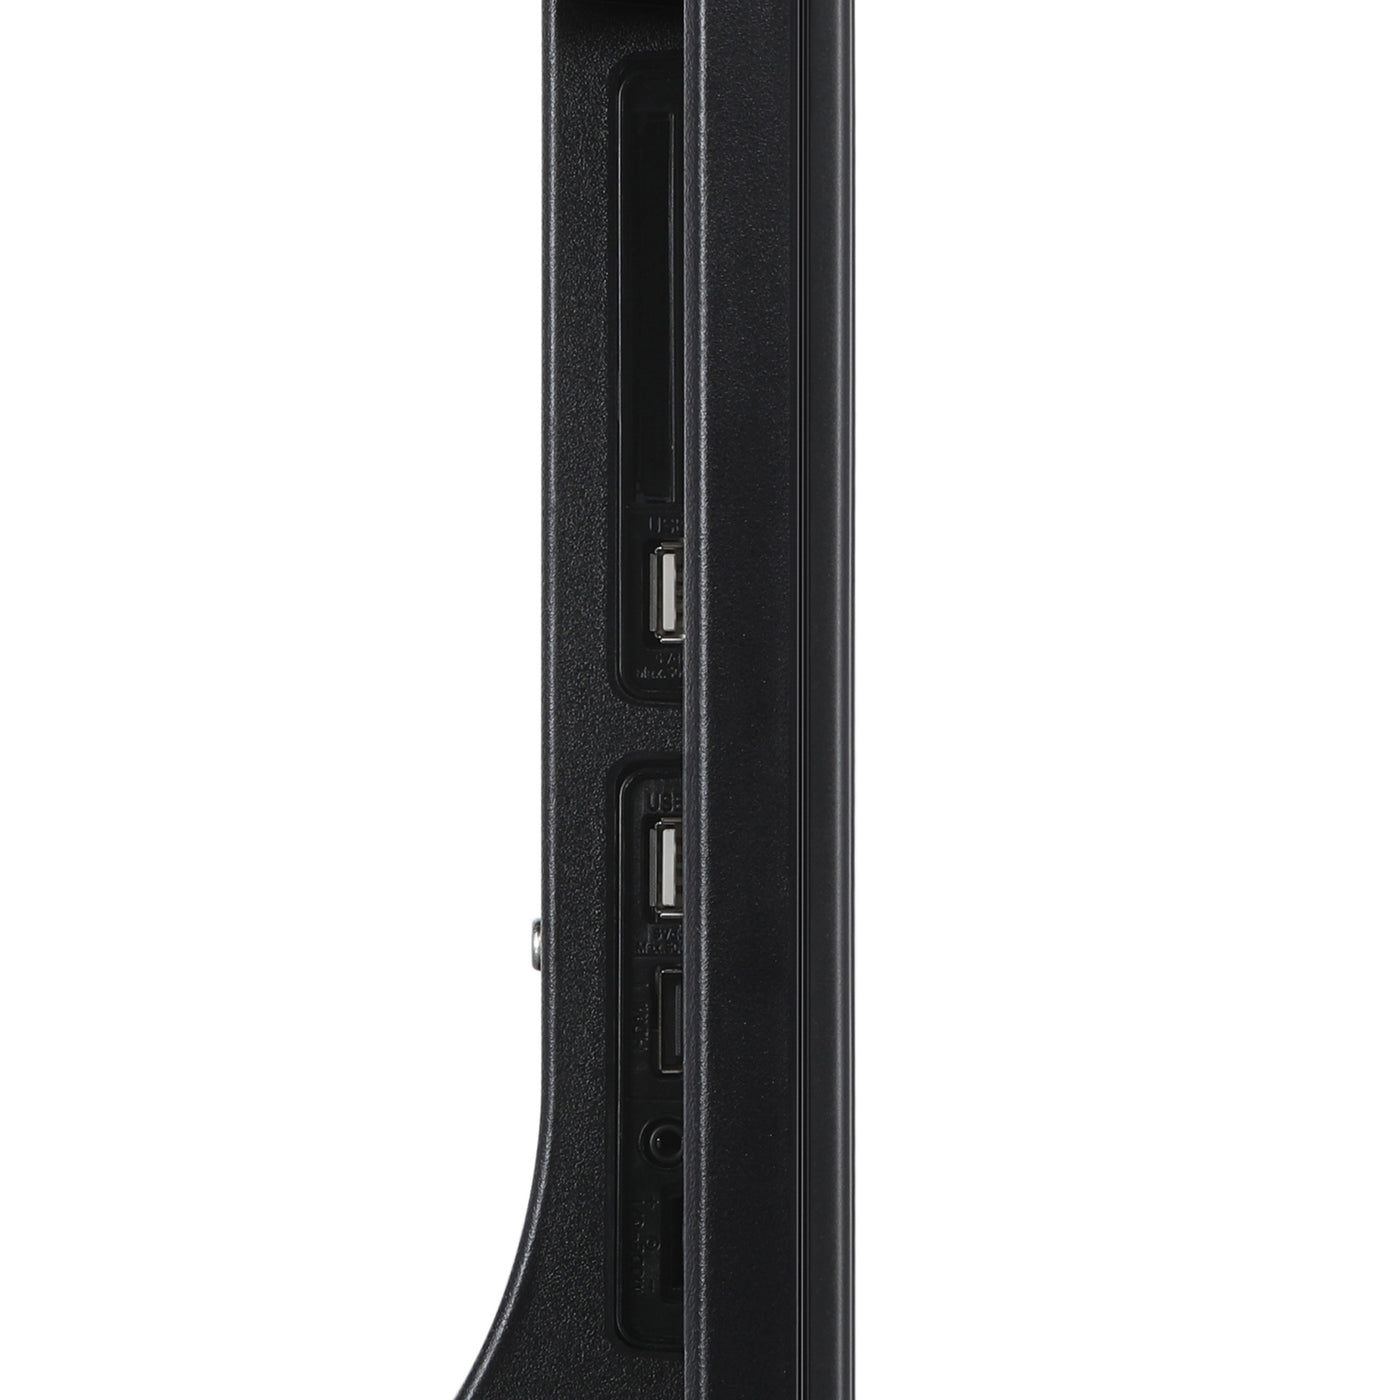 Lenco LED-2463BK - 24" Smart TV Android avec adaptateur voiture 12 V, noir